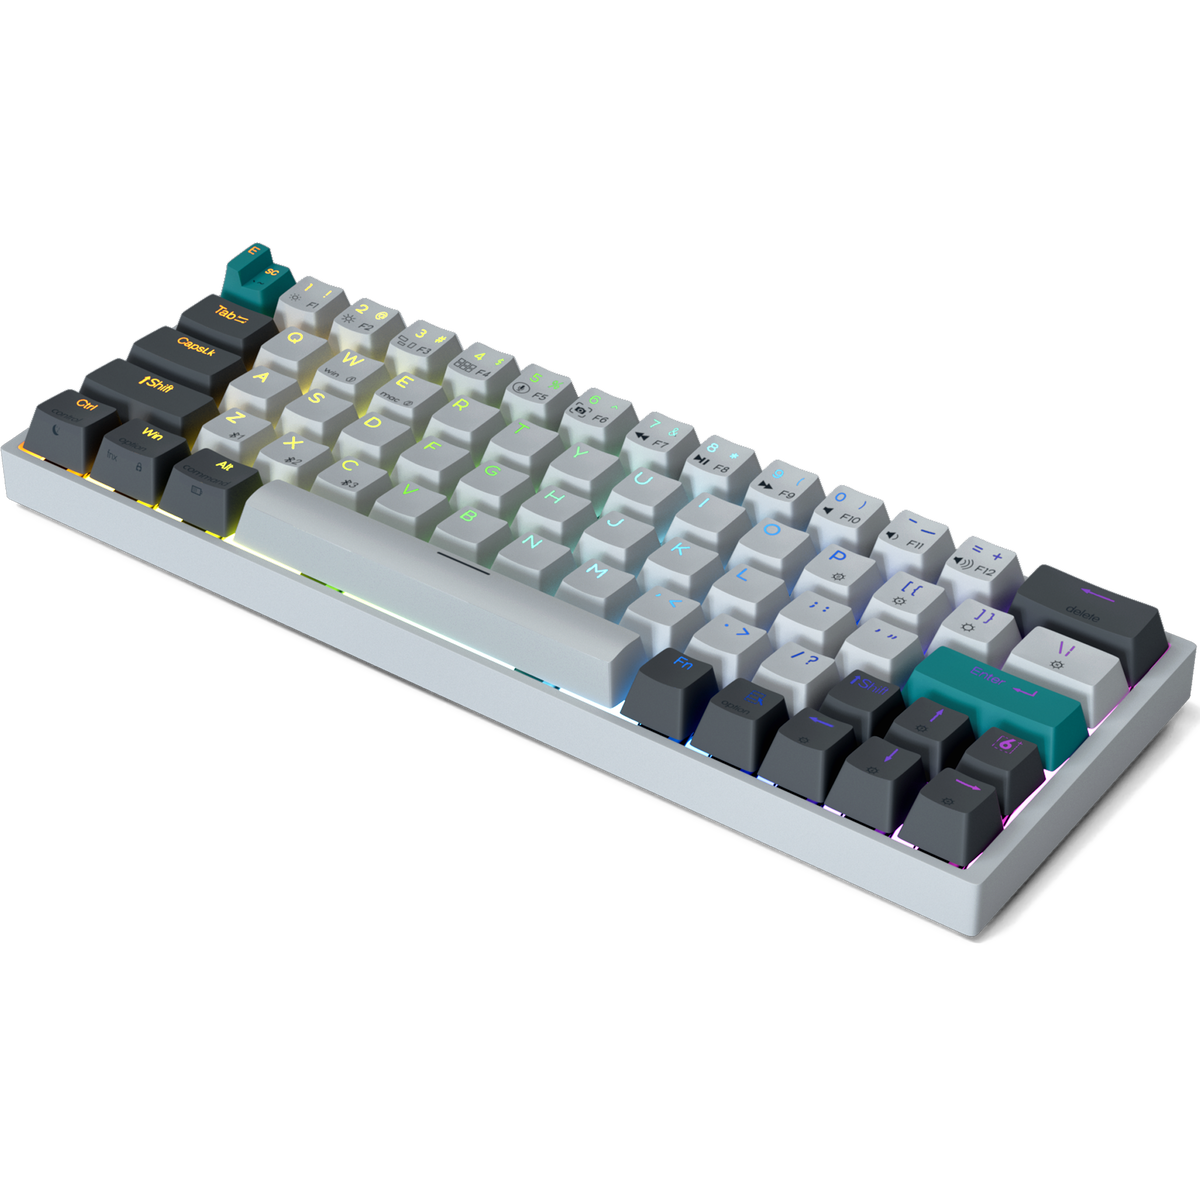 White 60 Mechanical Keyboard PBT Keycaps